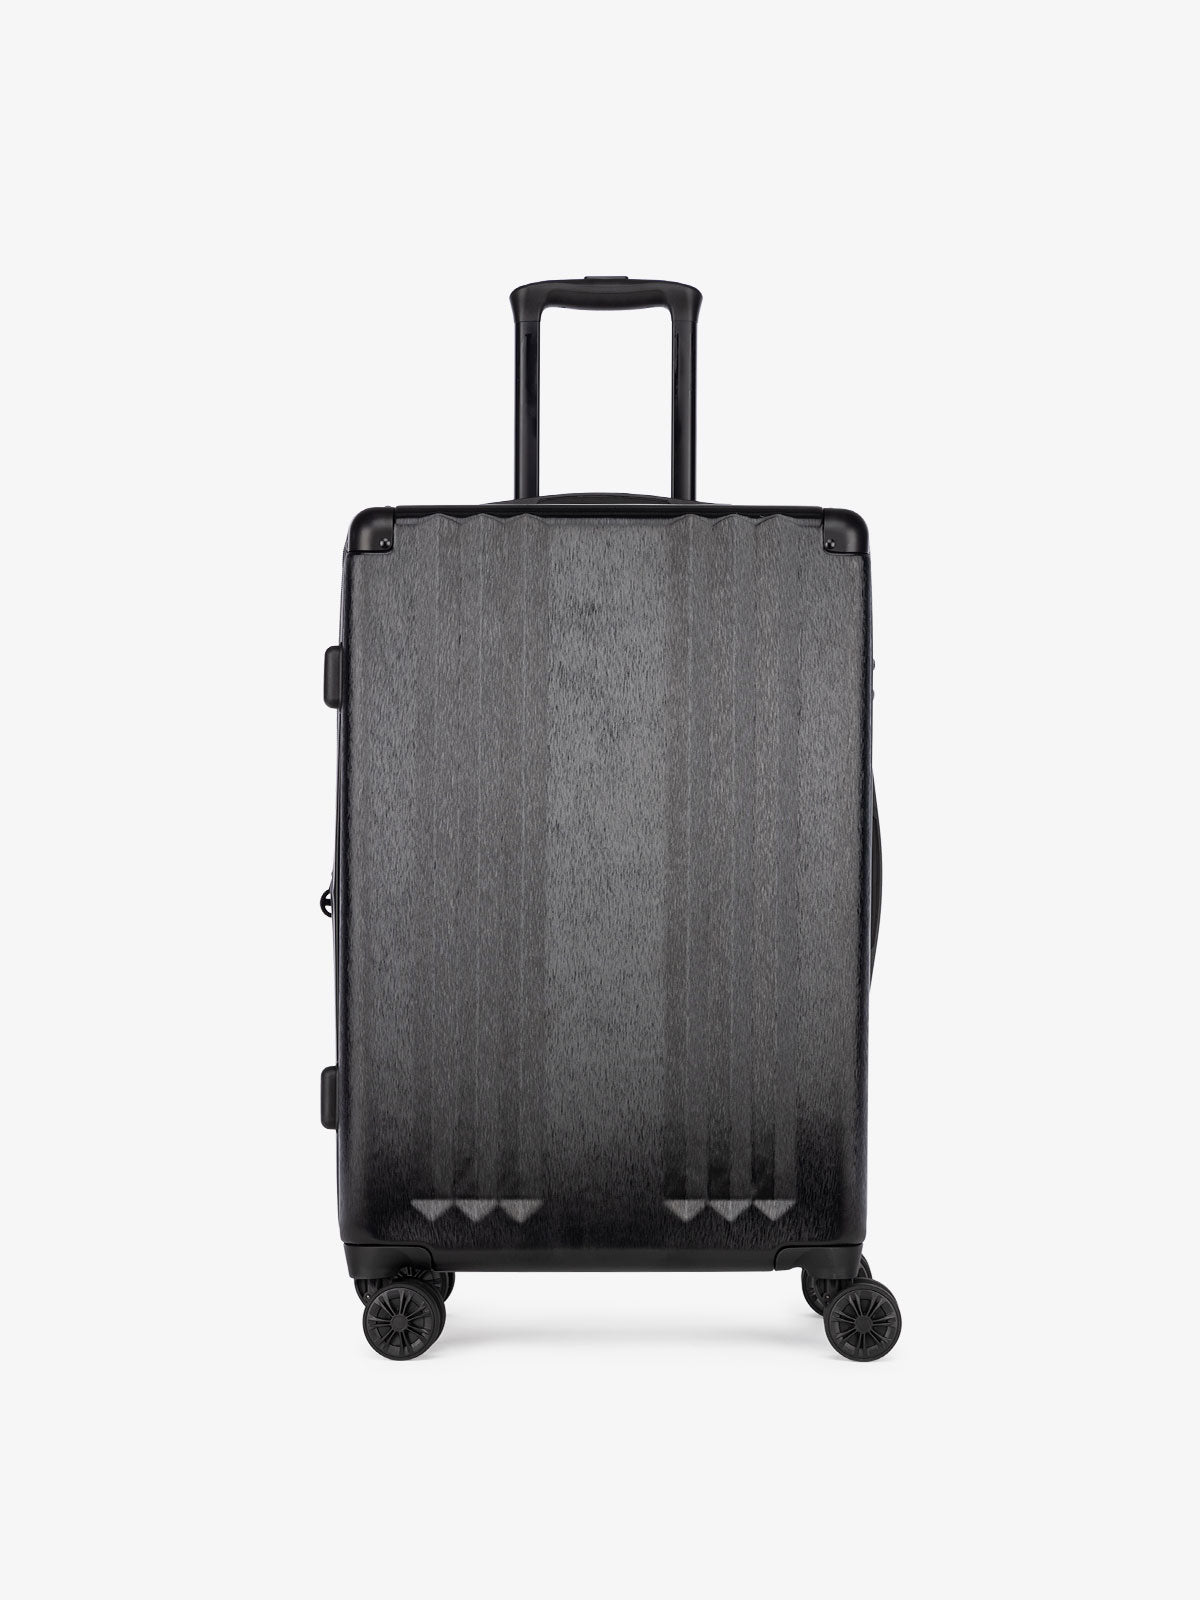 CALPAK Ambeur black medium 26 inch lightweight hard shell rolling luggage